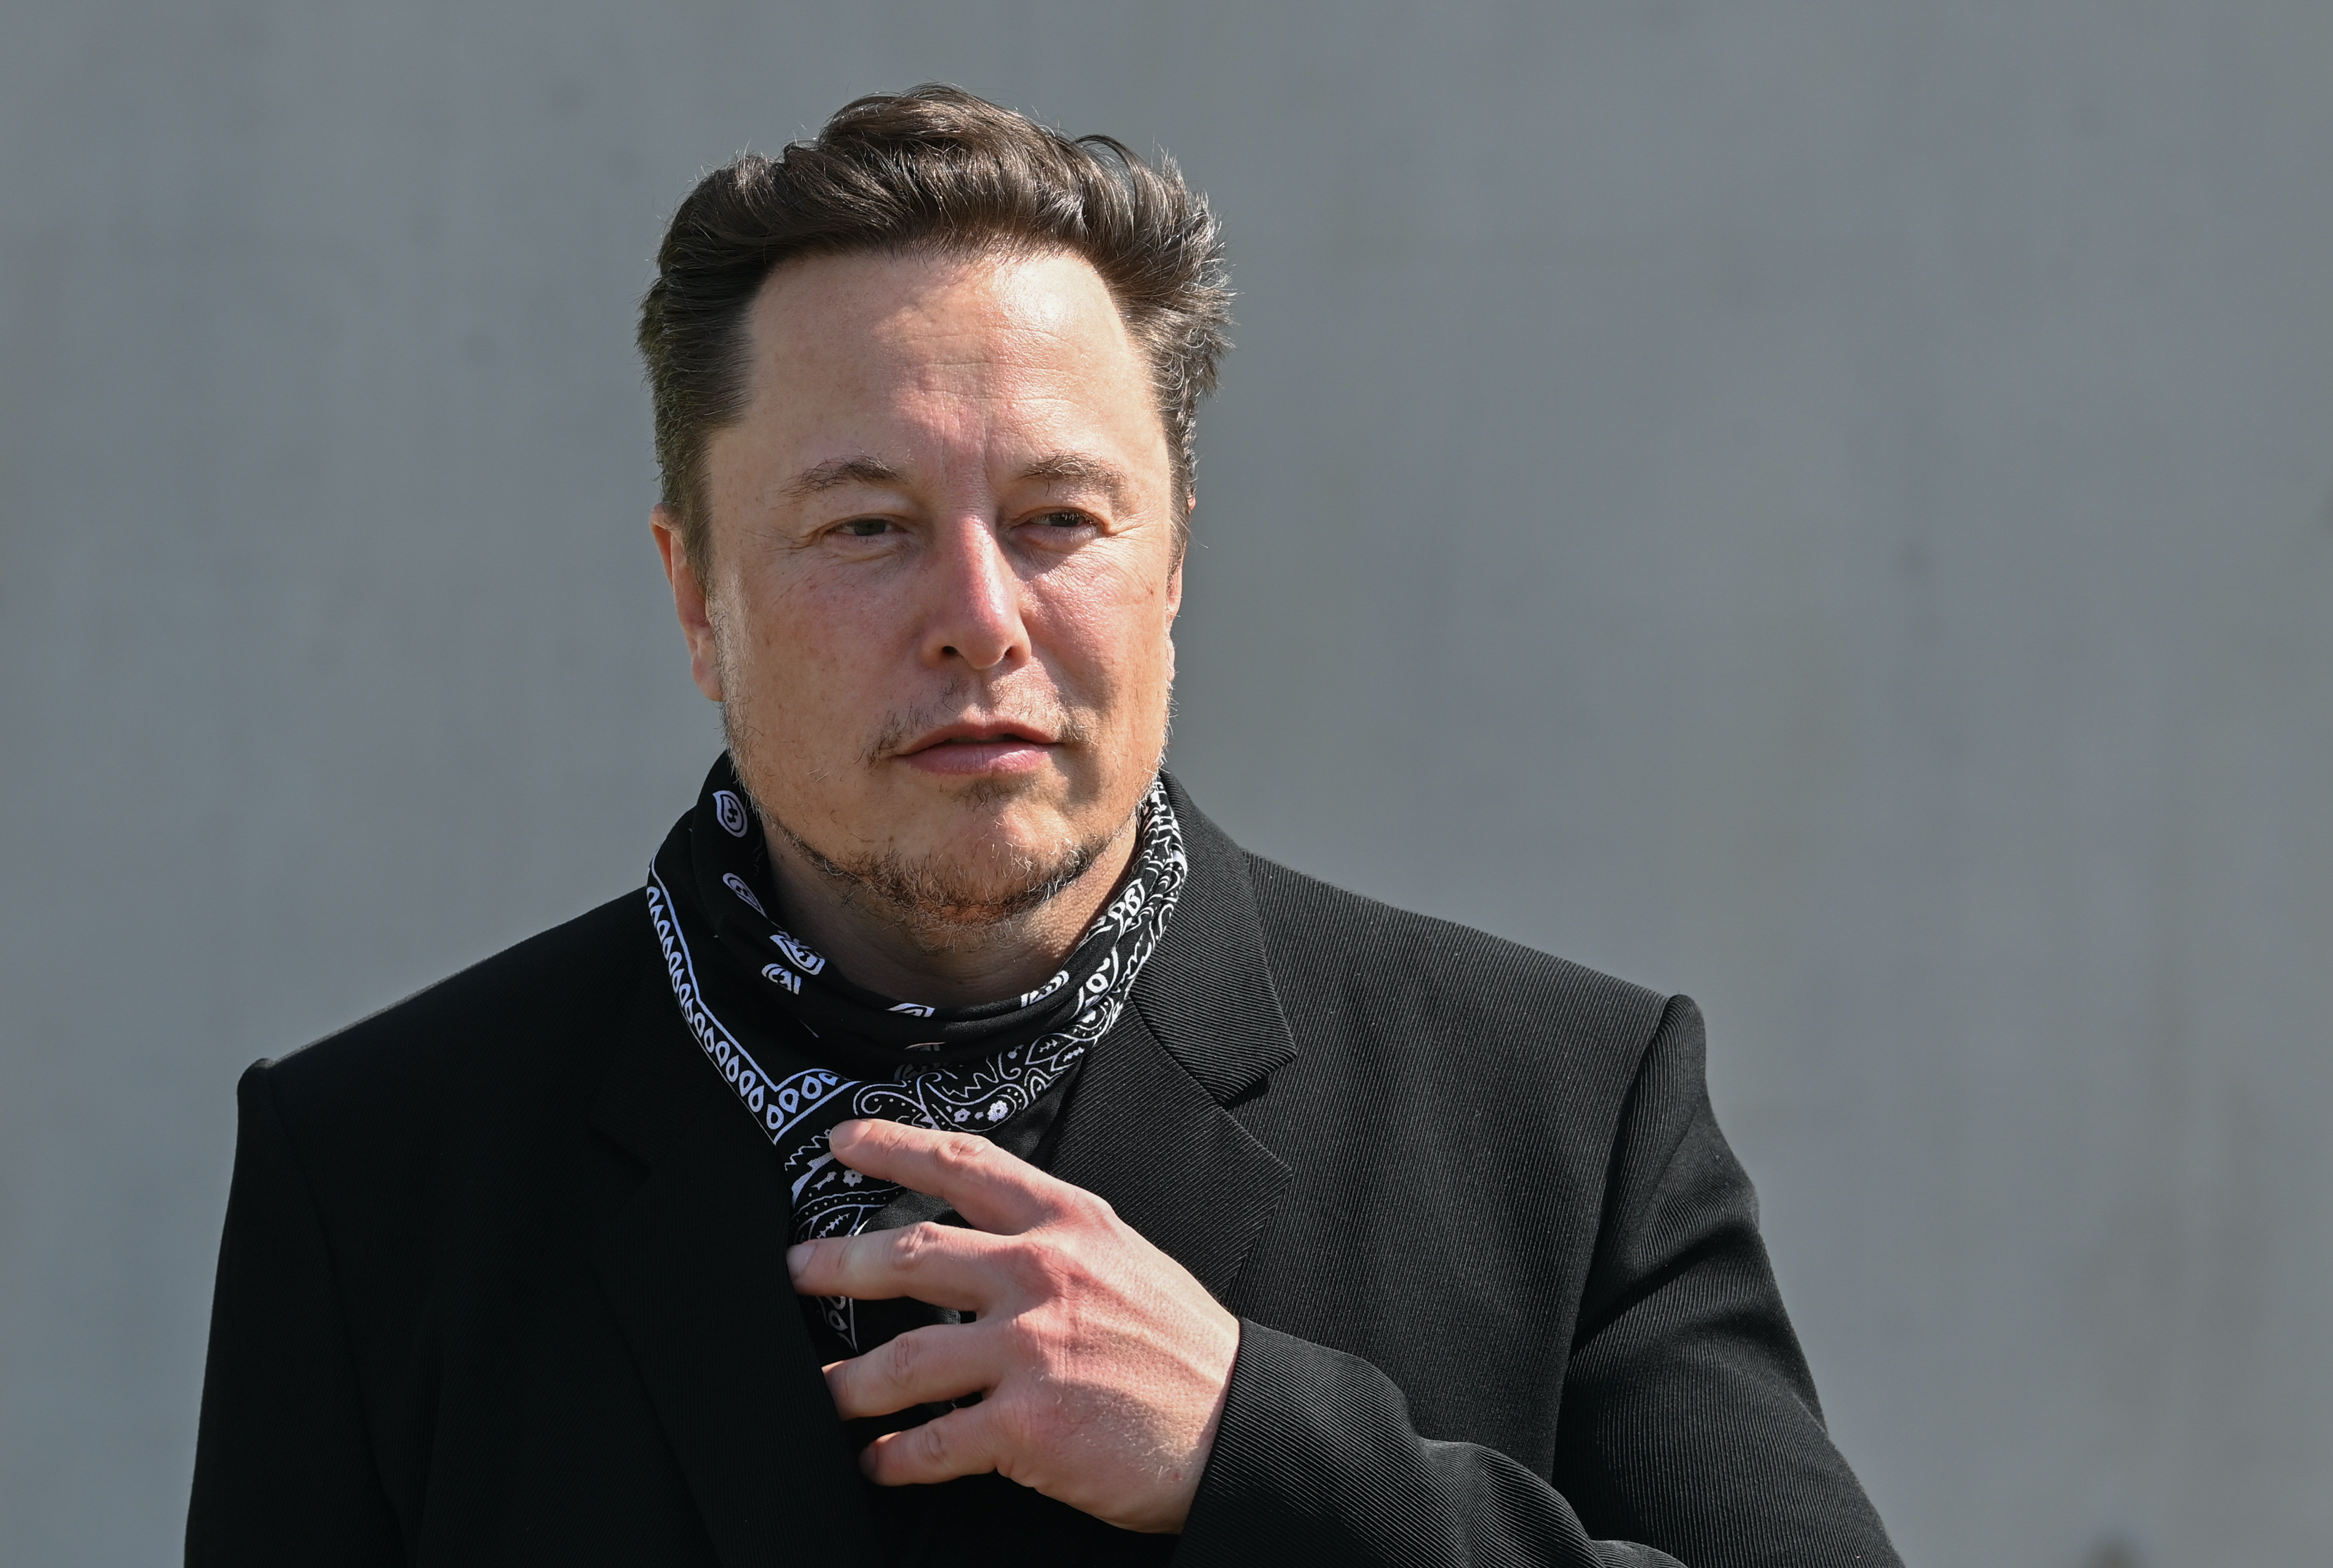 Musk sells Tesla shares worth 7 billion dollars